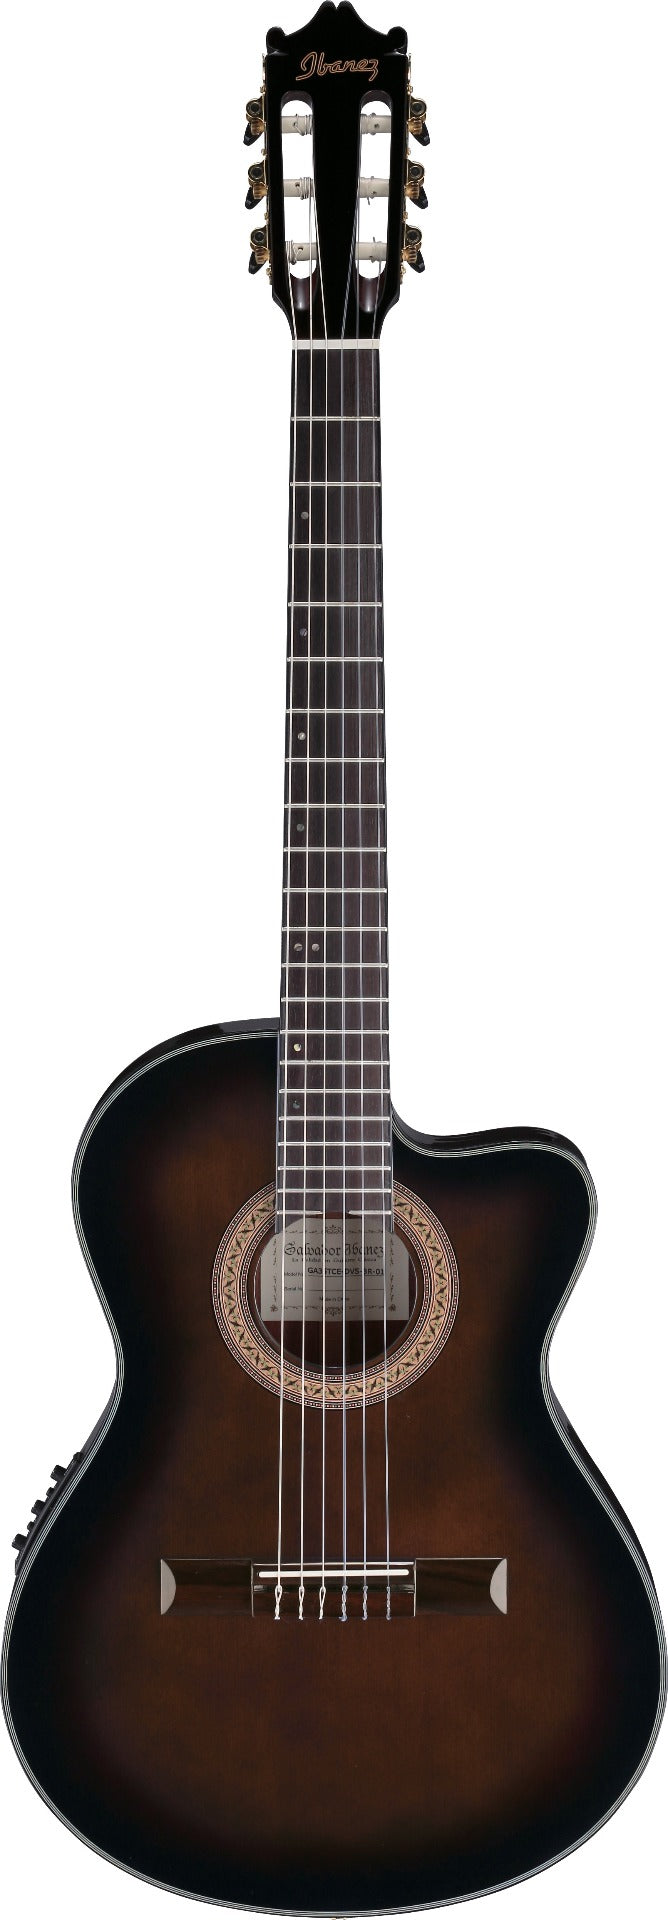 Ibanez GA35TCE Thinline Acoustic Electric Classical Guitar in Dark Violin Burst